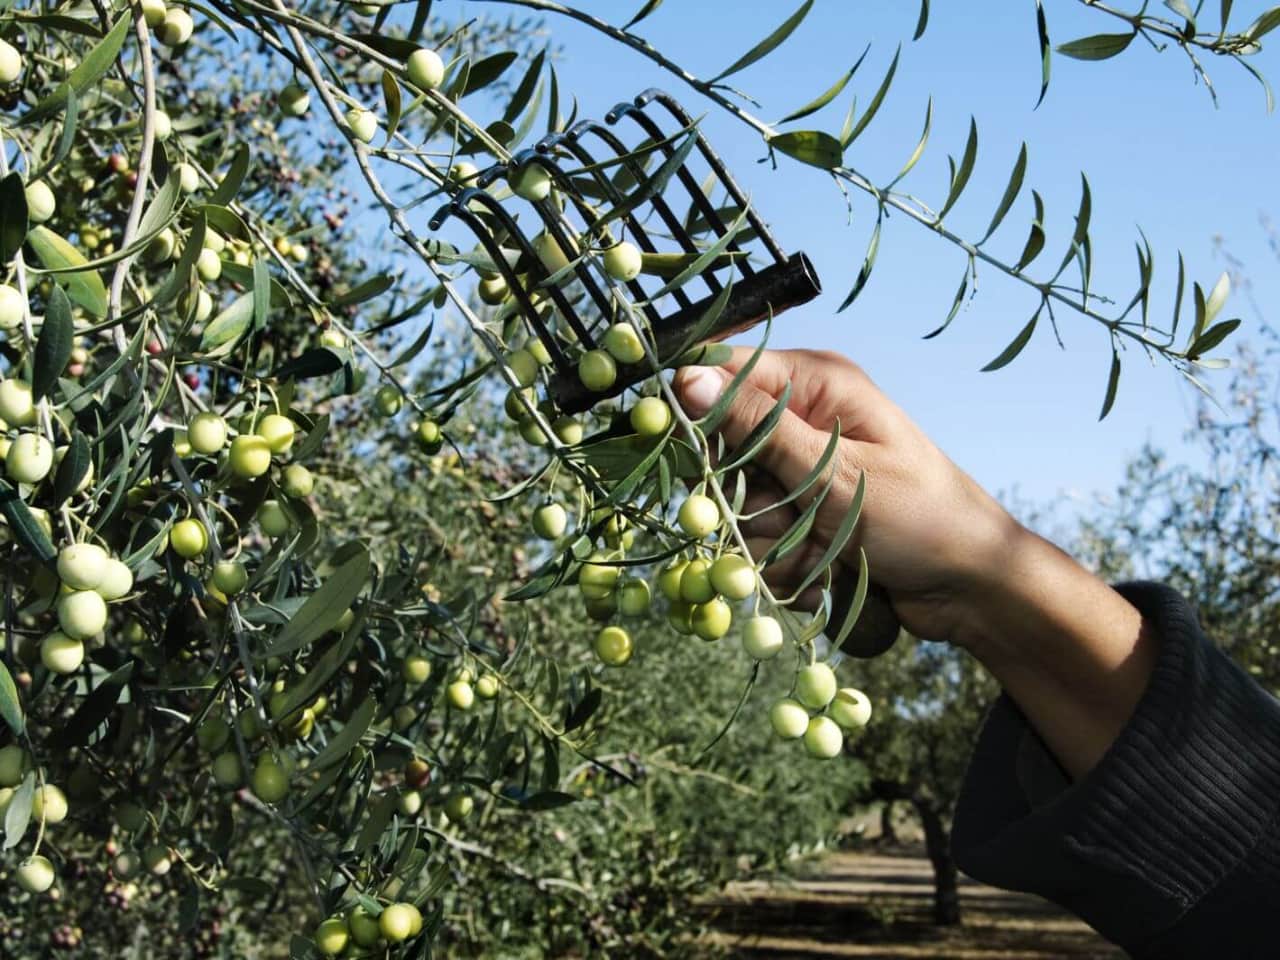 The_olive harvesting_season has_begun_for_all_Cretan_producers